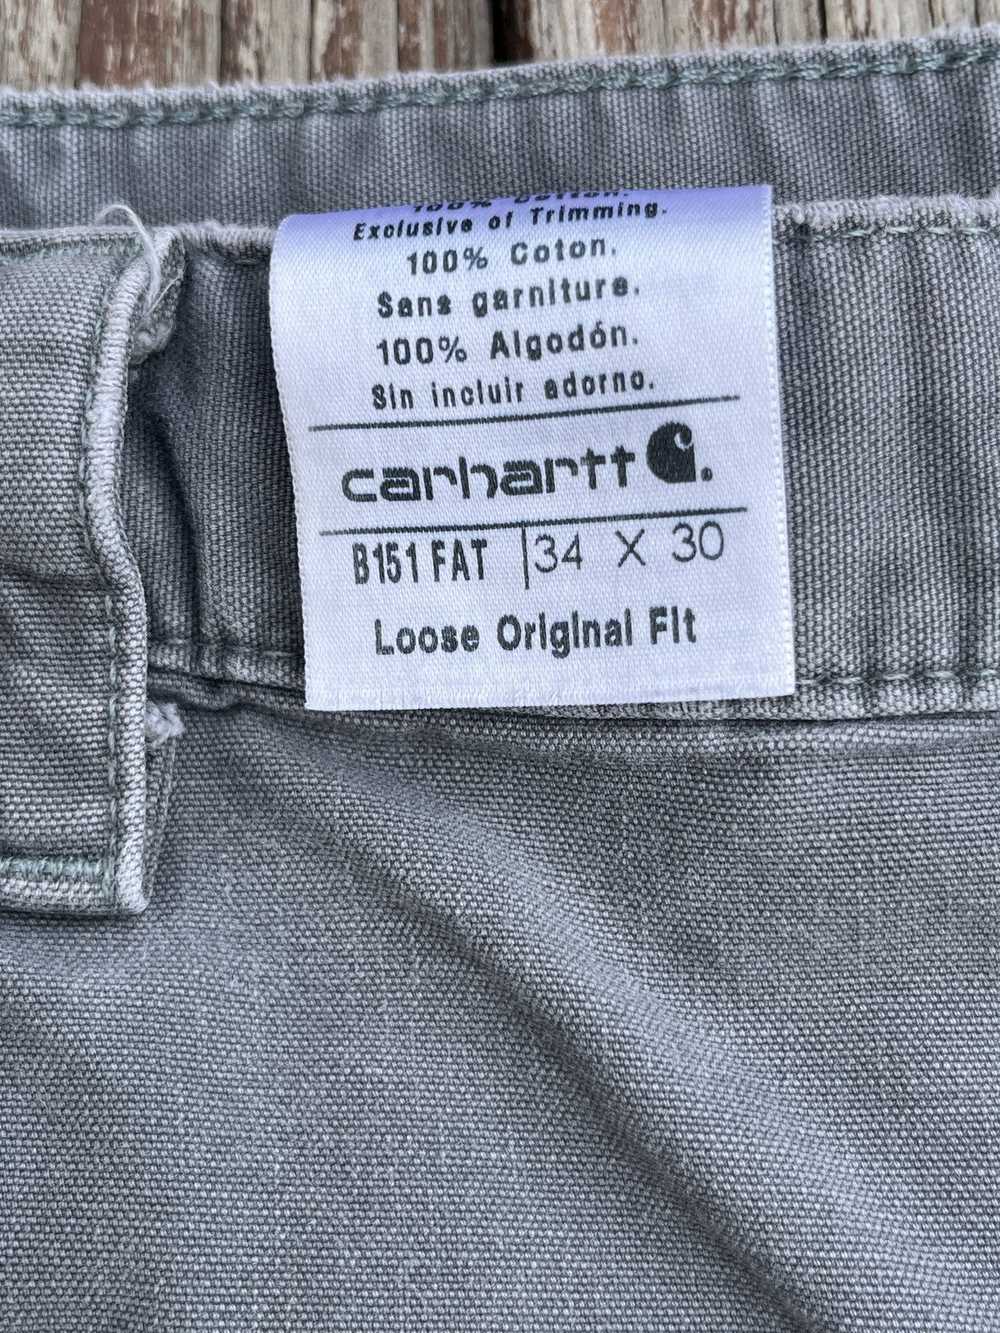 Carhartt Vintage Carhartt Cargo Pants - image 4